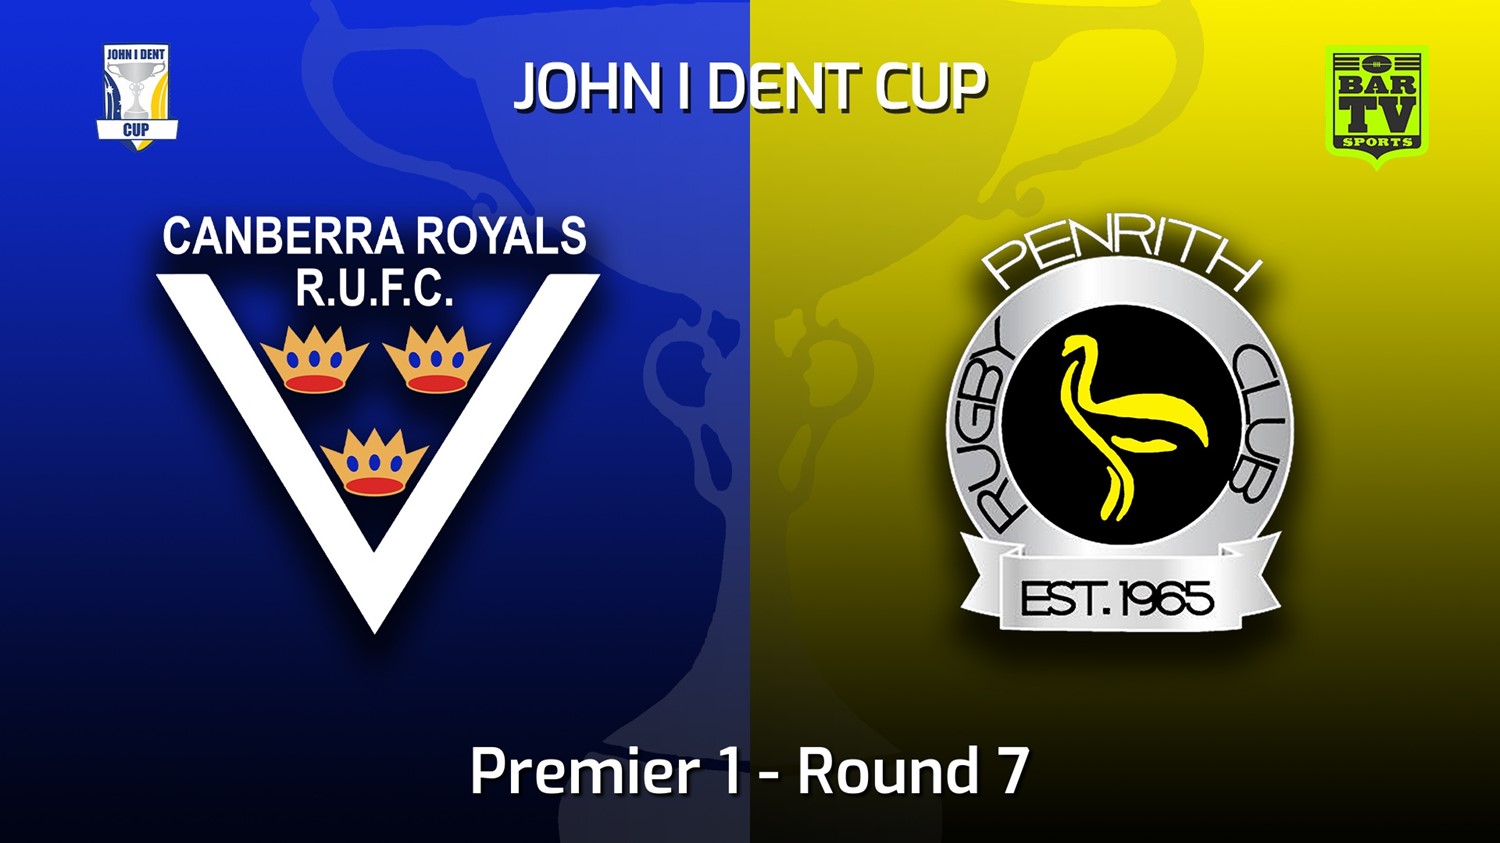 220604-John I Dent (ACT) Round 7 - Premier 1 - Canberra Royals v Penrith Emus Minigame Slate Image